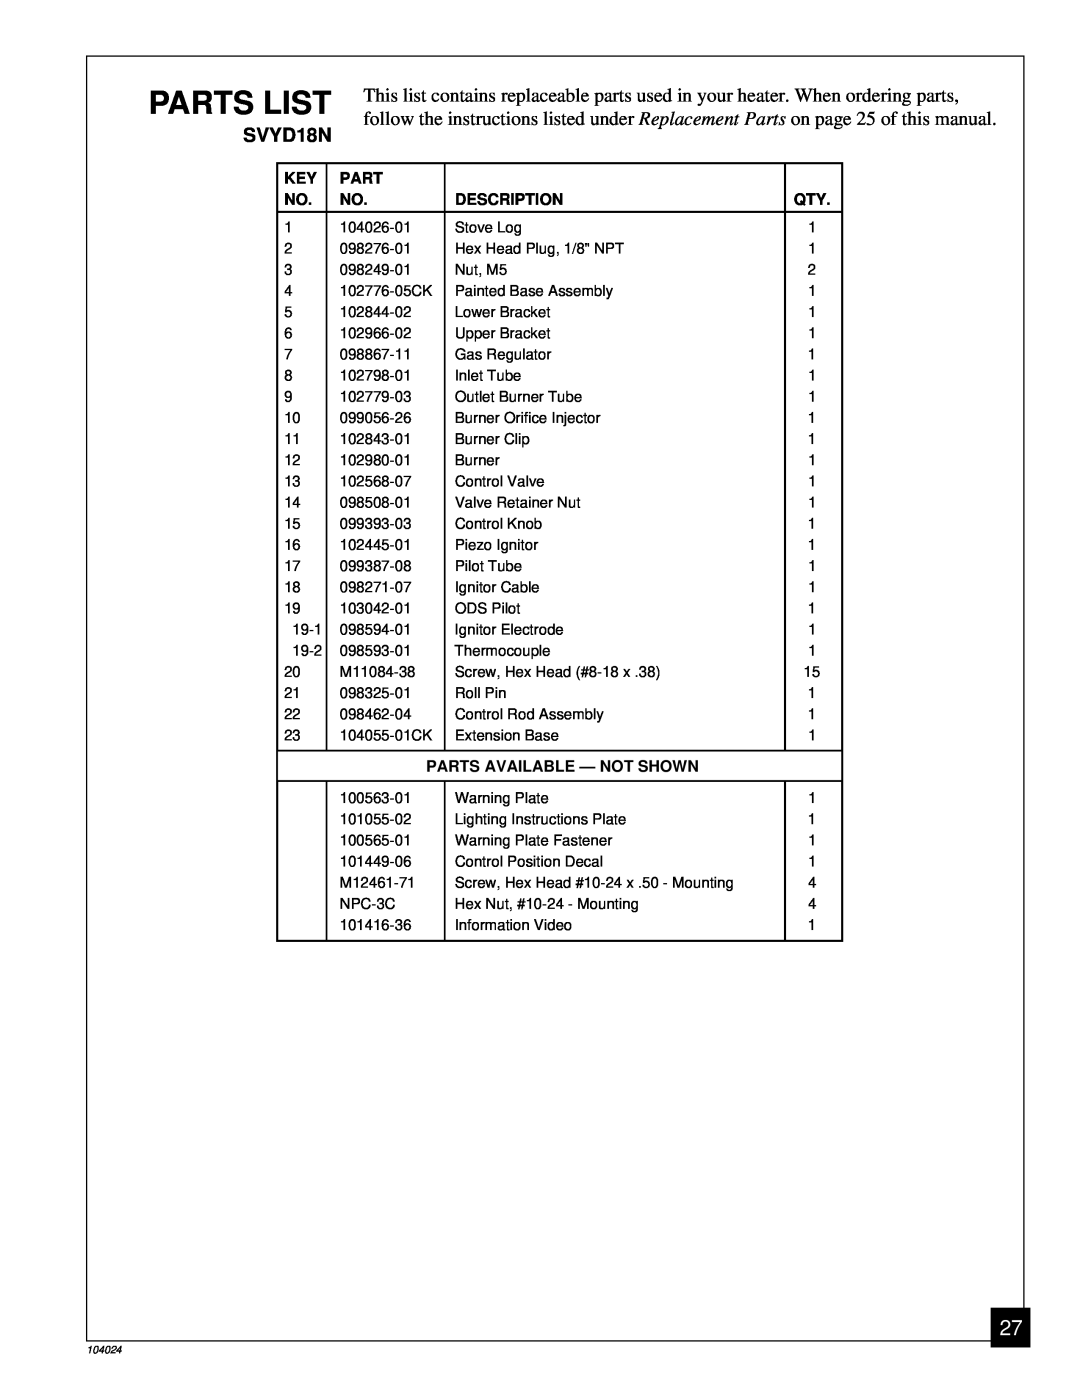 Desa SVYD18N installation manual Parts List, Description, Parts Available - Not Shown 